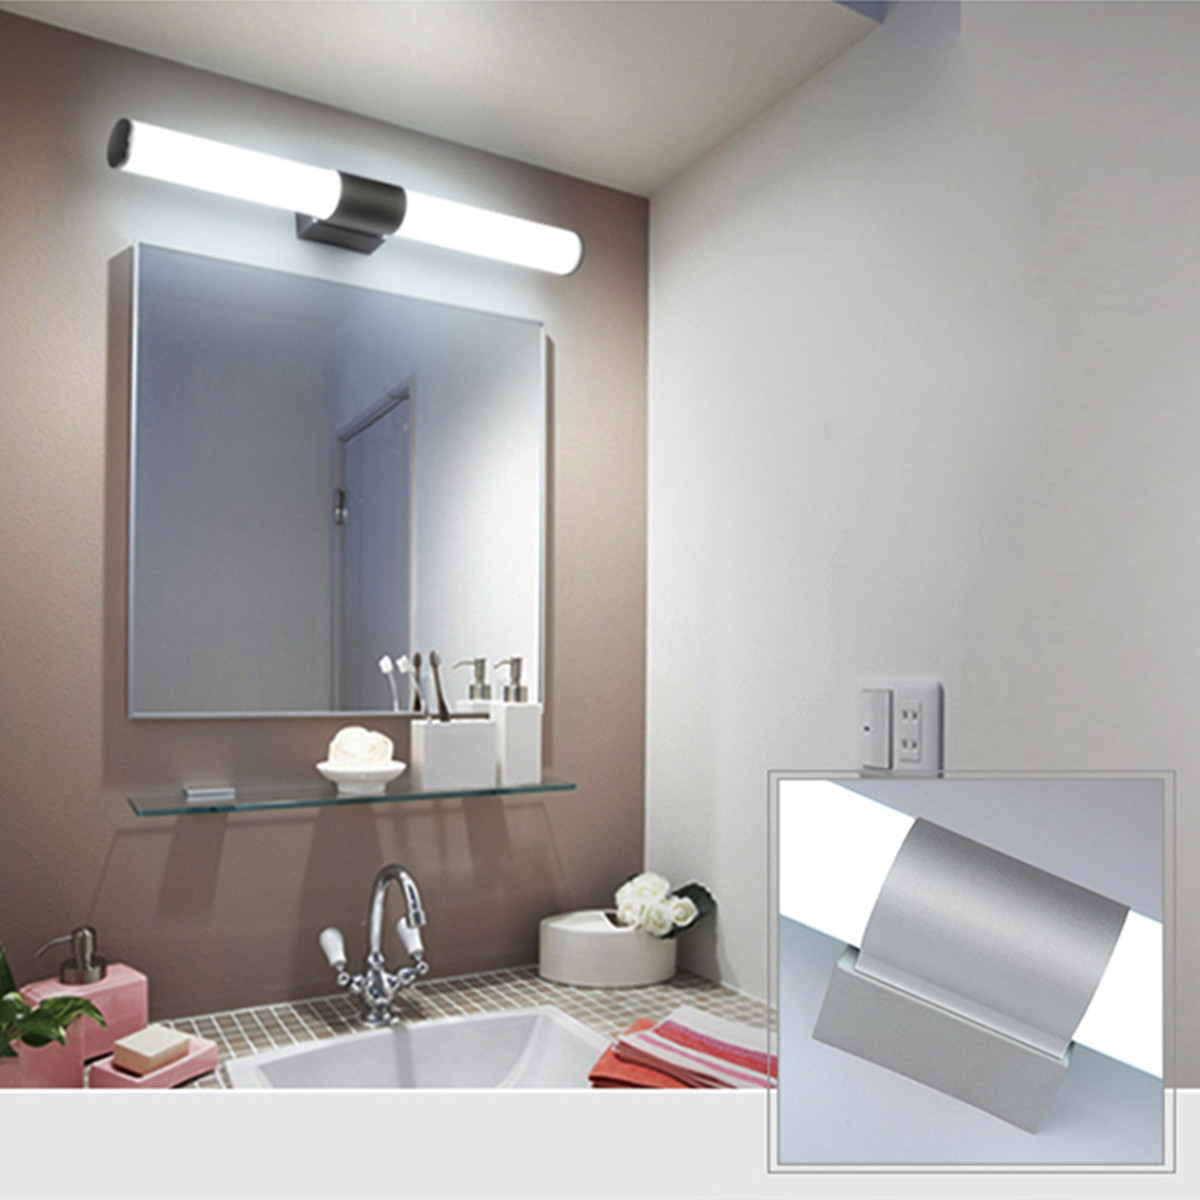 Bathroom Vanity Mirror With Lights
 Acrylic Modern Bathroom Vanity LED Light Front Mirror LED